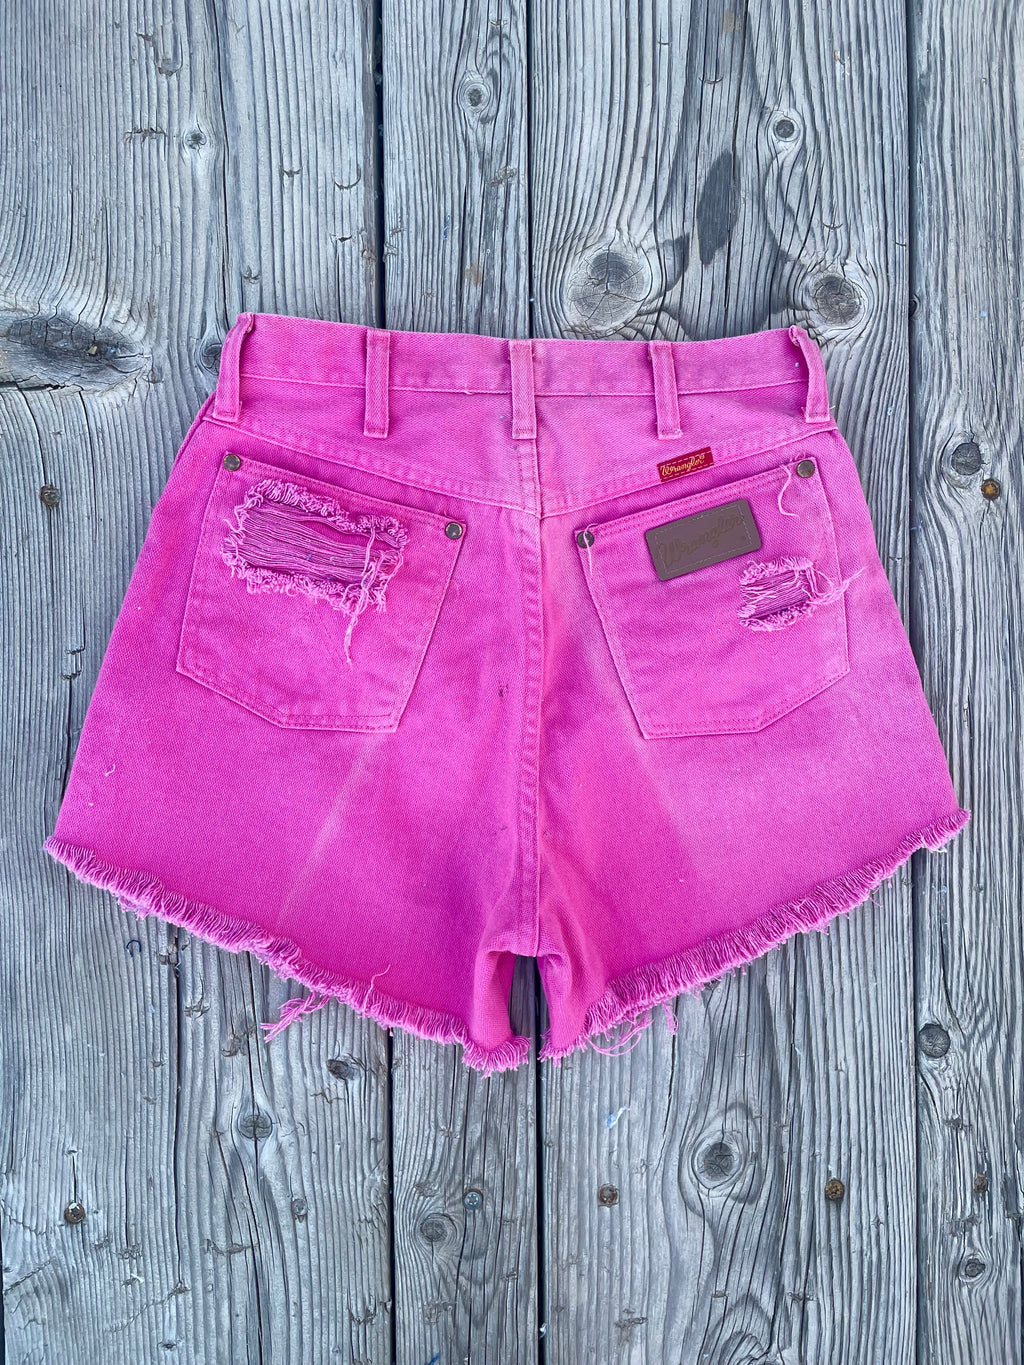 Vintage Shorts – The Buckskin Babes